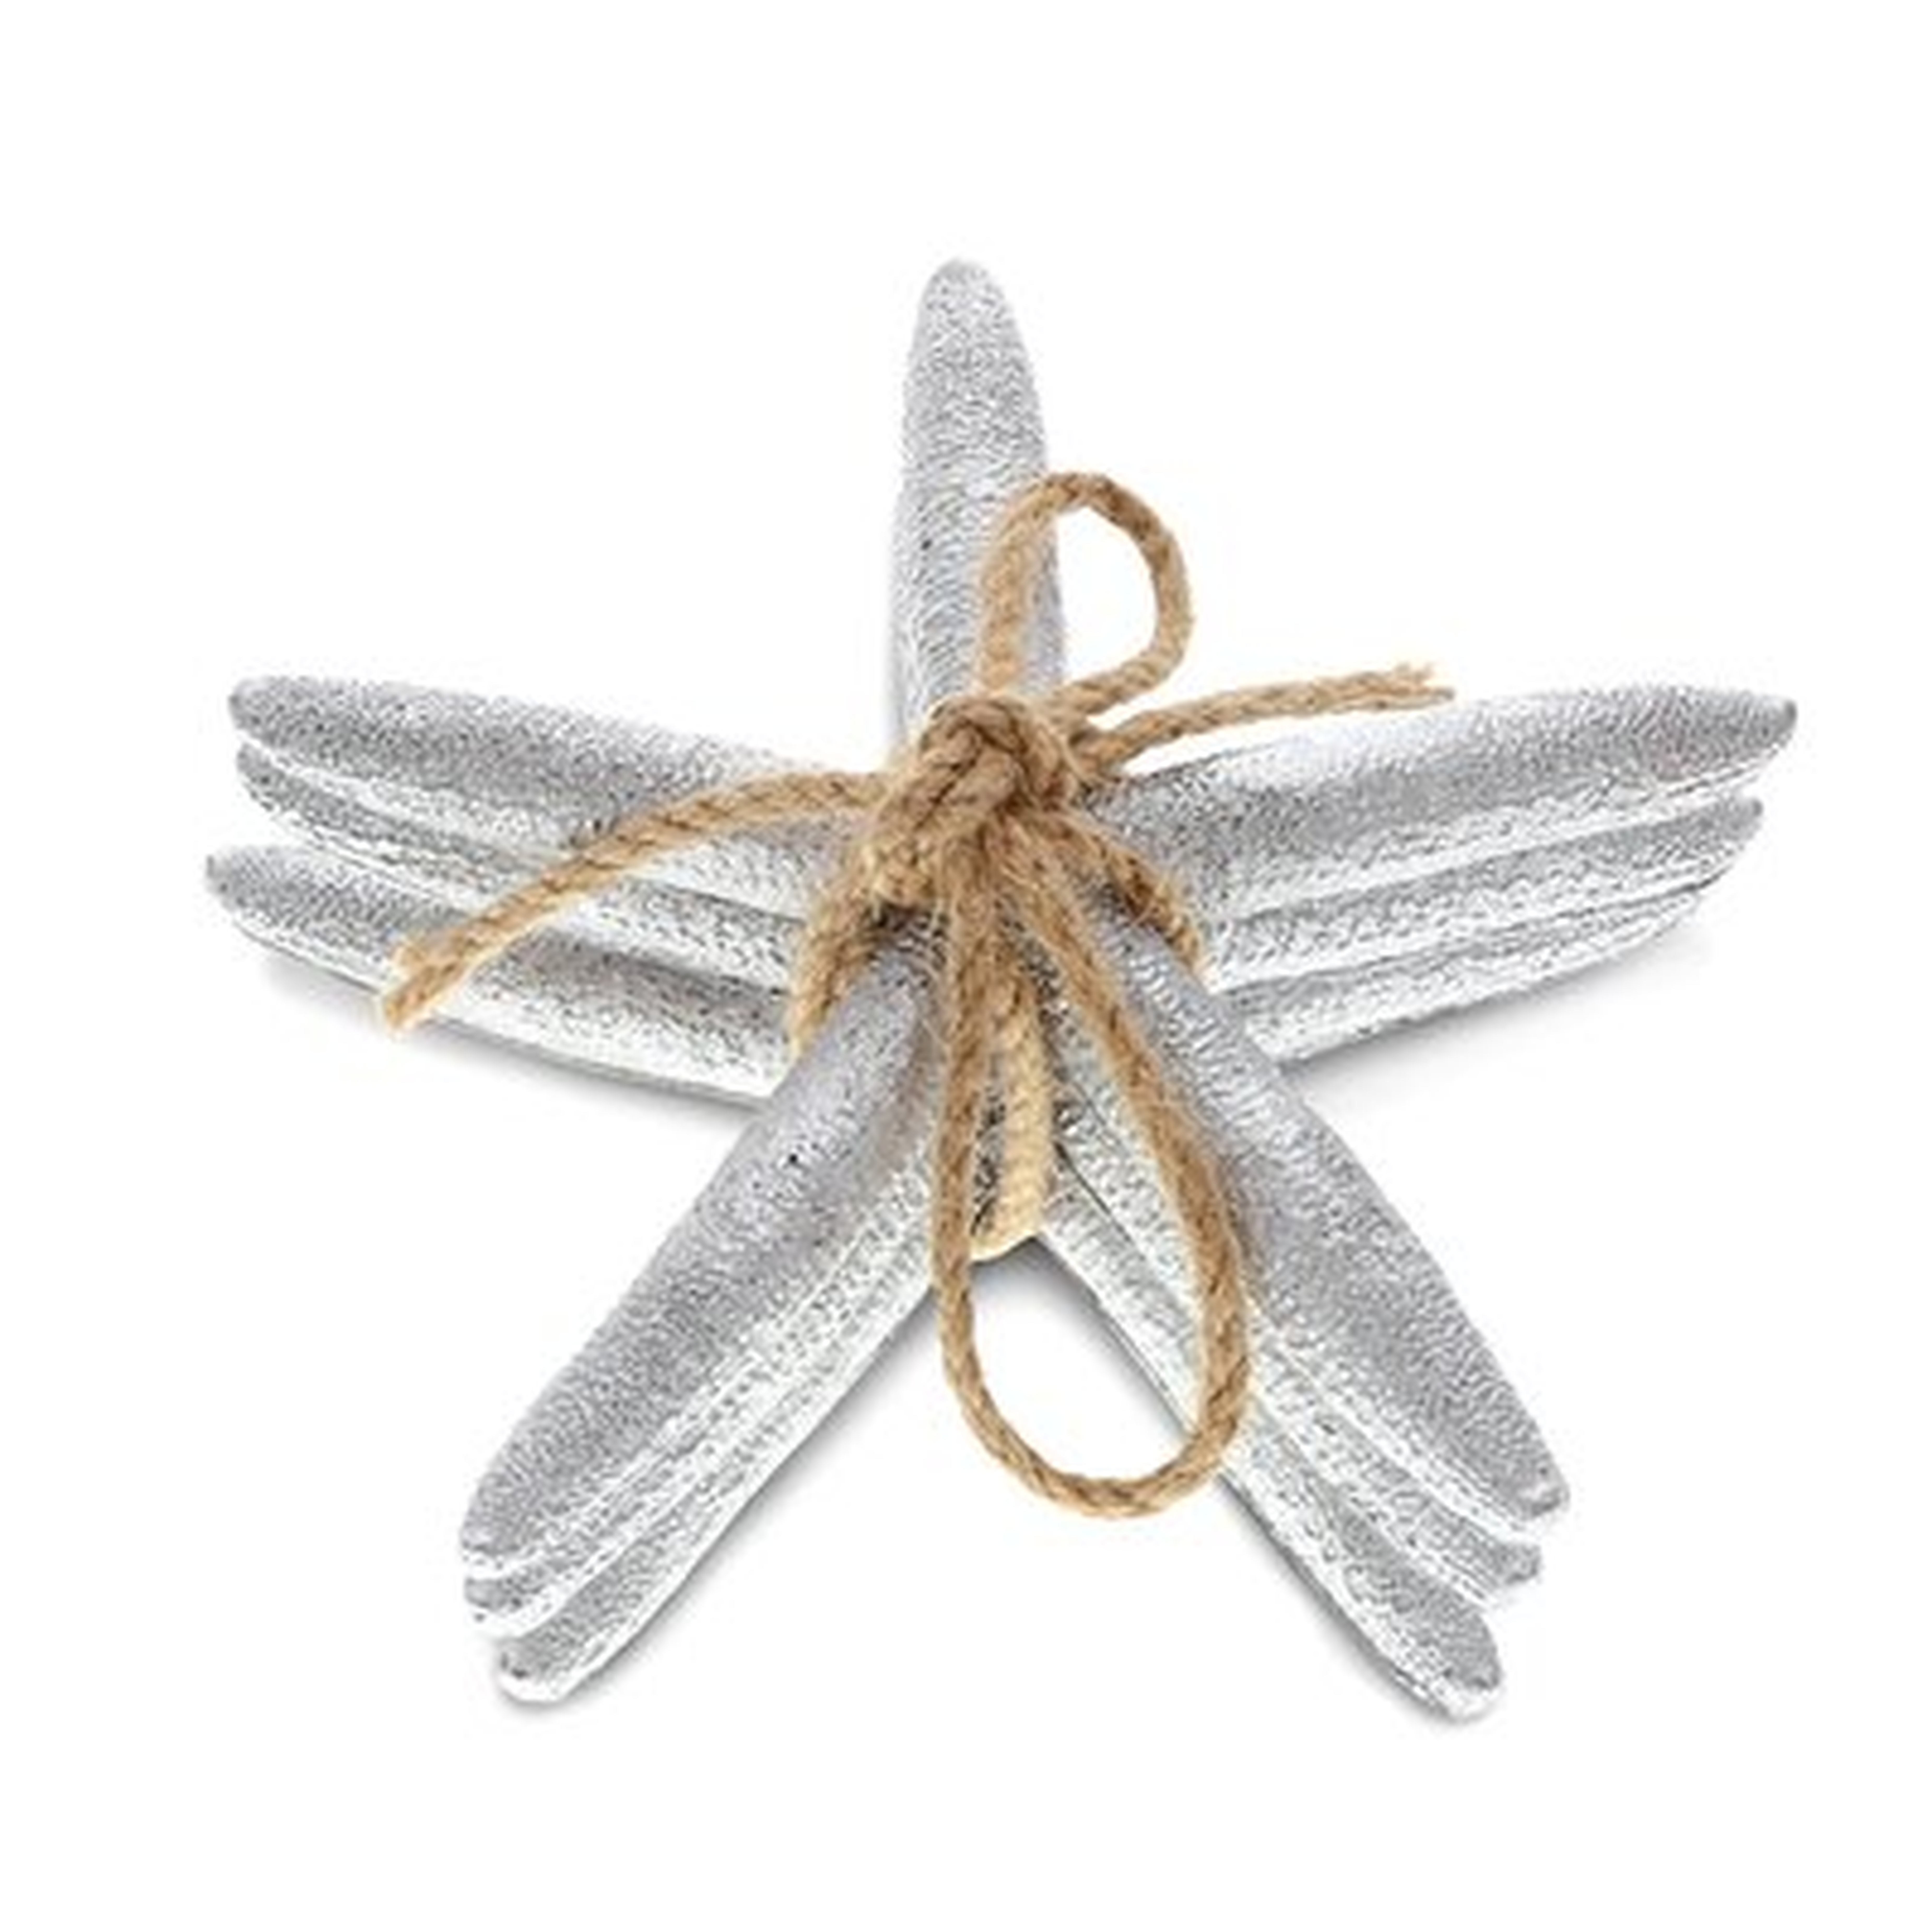 Poisson Decorative Resin Starfish Home Accents - Wayfair